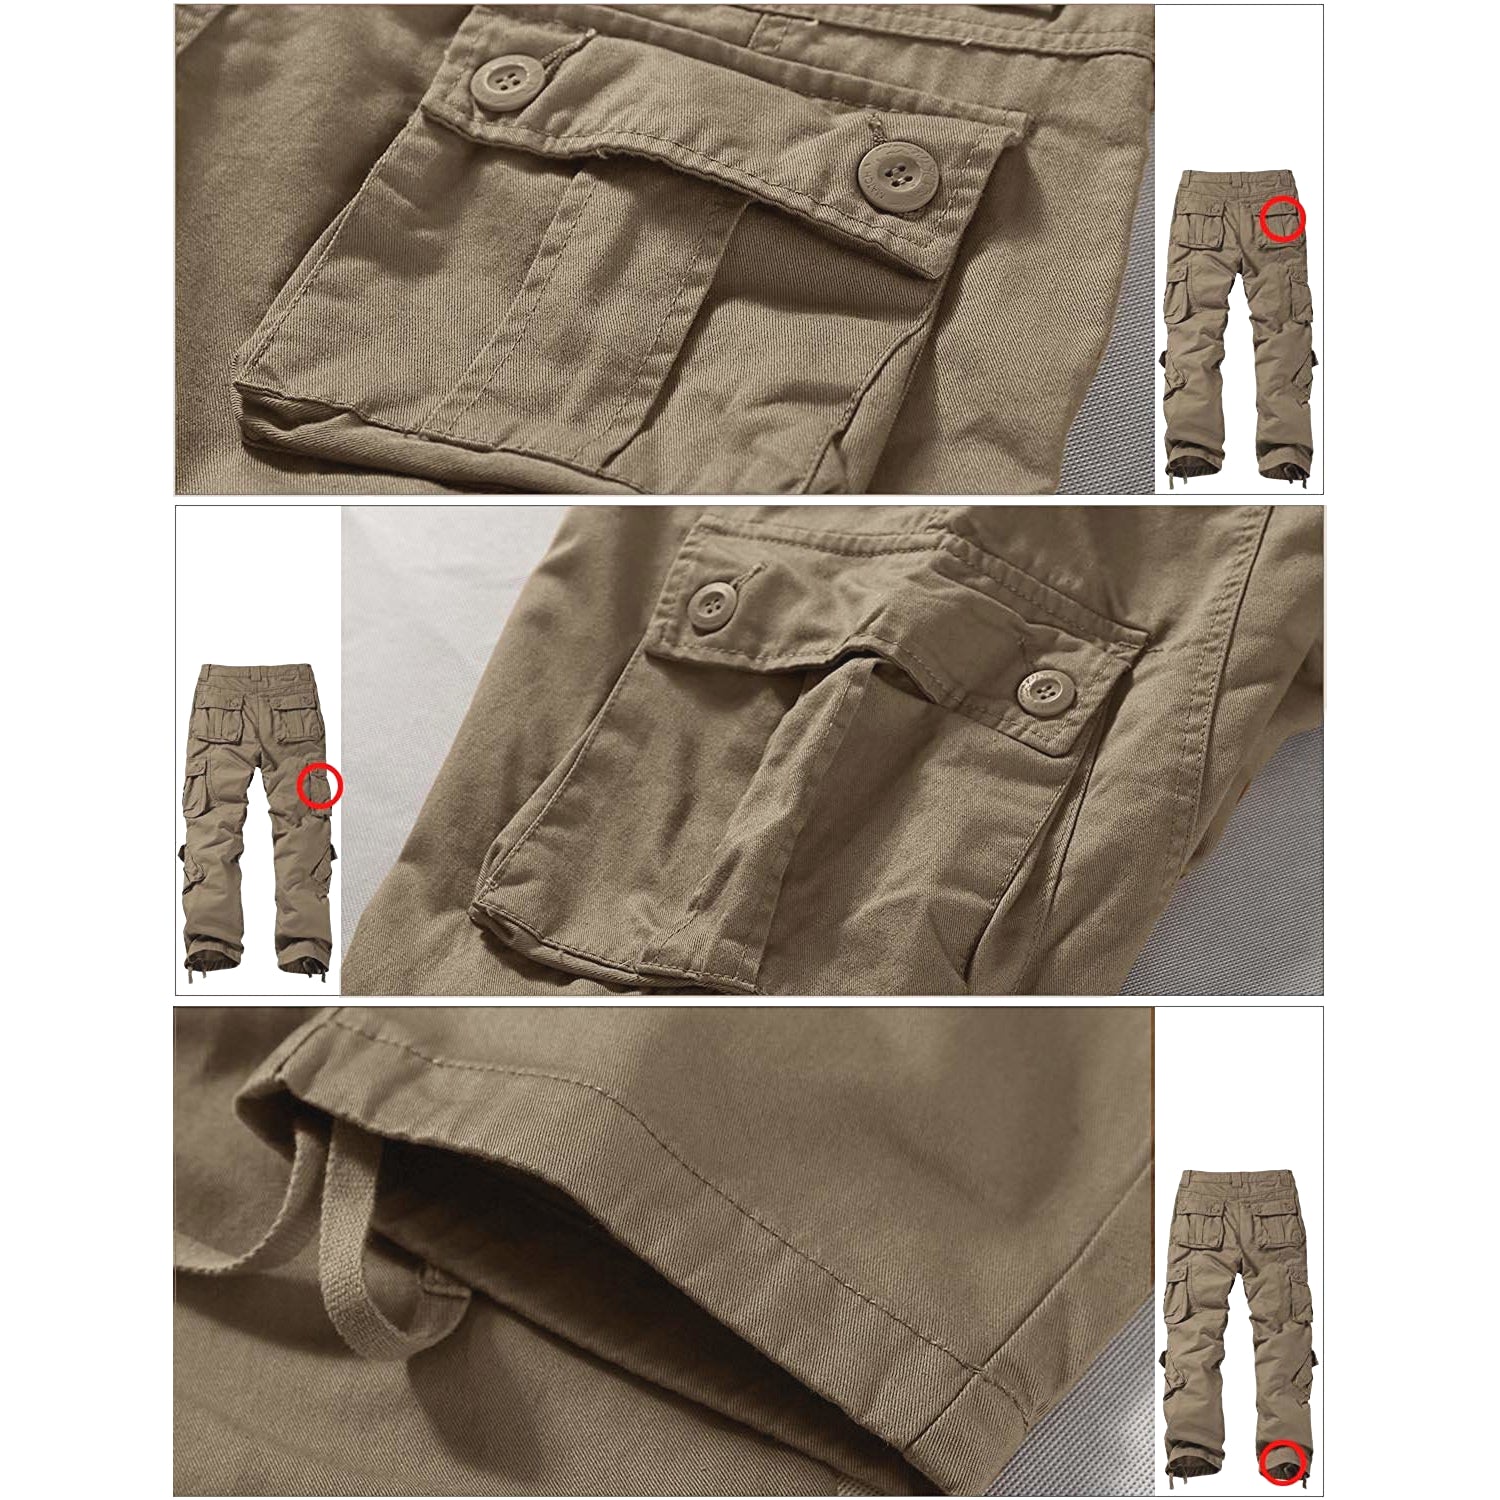 Pantalones Tipo Cargo MatchStick para Hombre - BIOWEB® Colombia